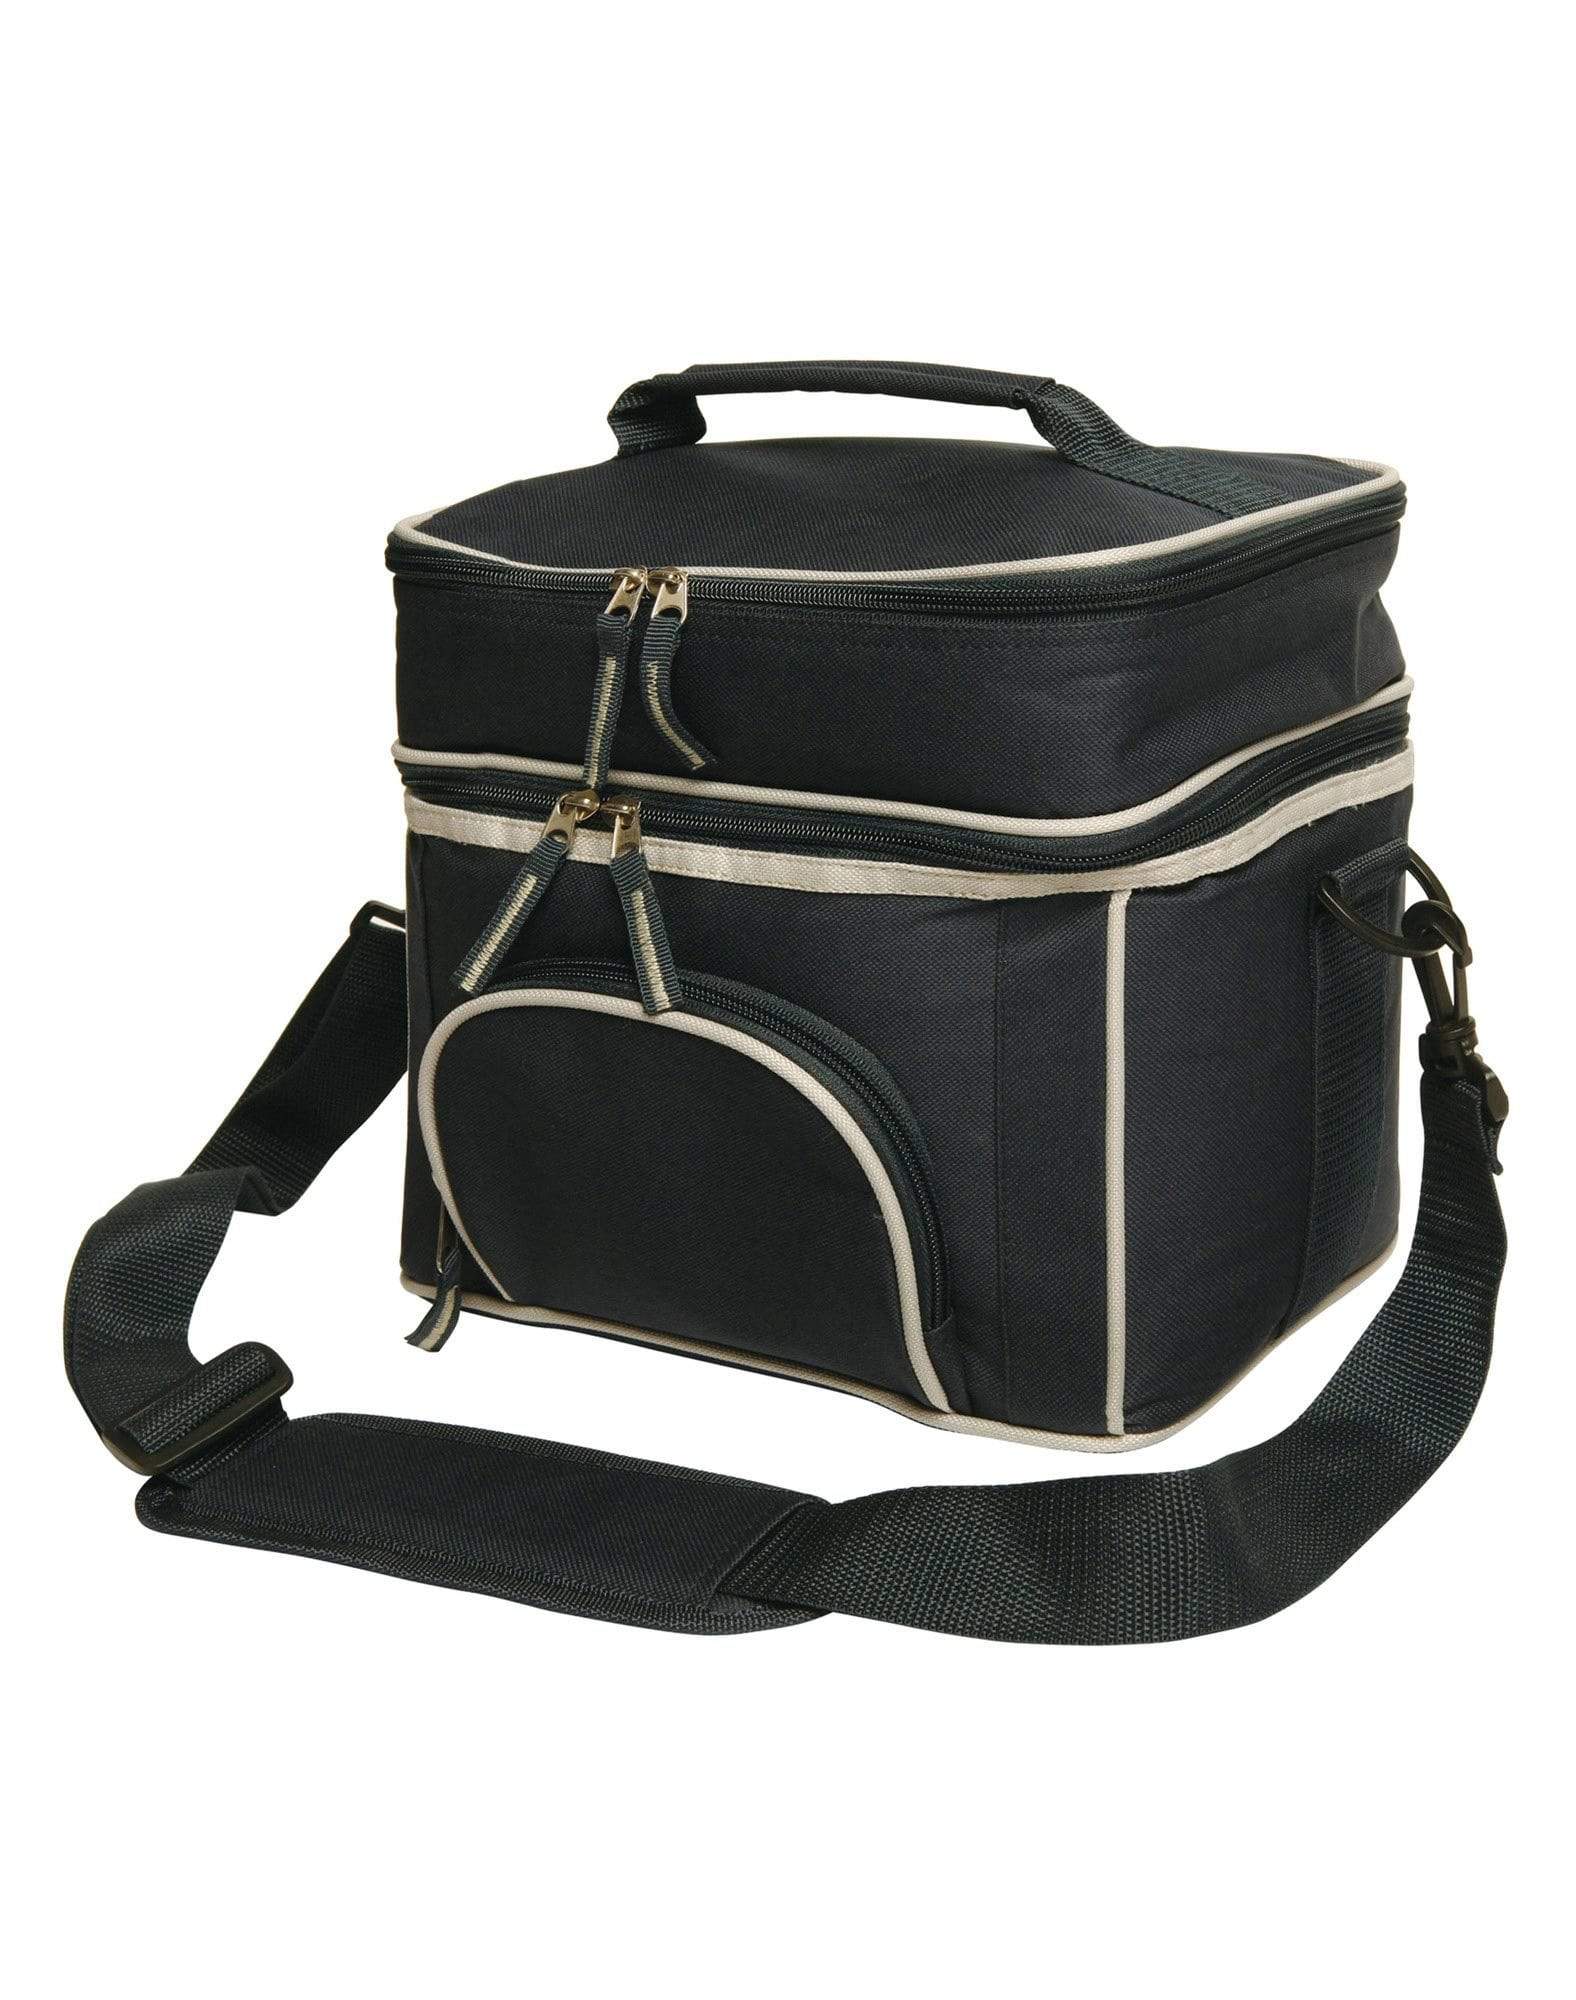 Travel Cooler Bag - Lunch/picnic B6002 Active Wear Winning Spirit Black/Silver "(w)28cm x (h)25cm x (d)18cm Capacity: 12.6 Litres" 